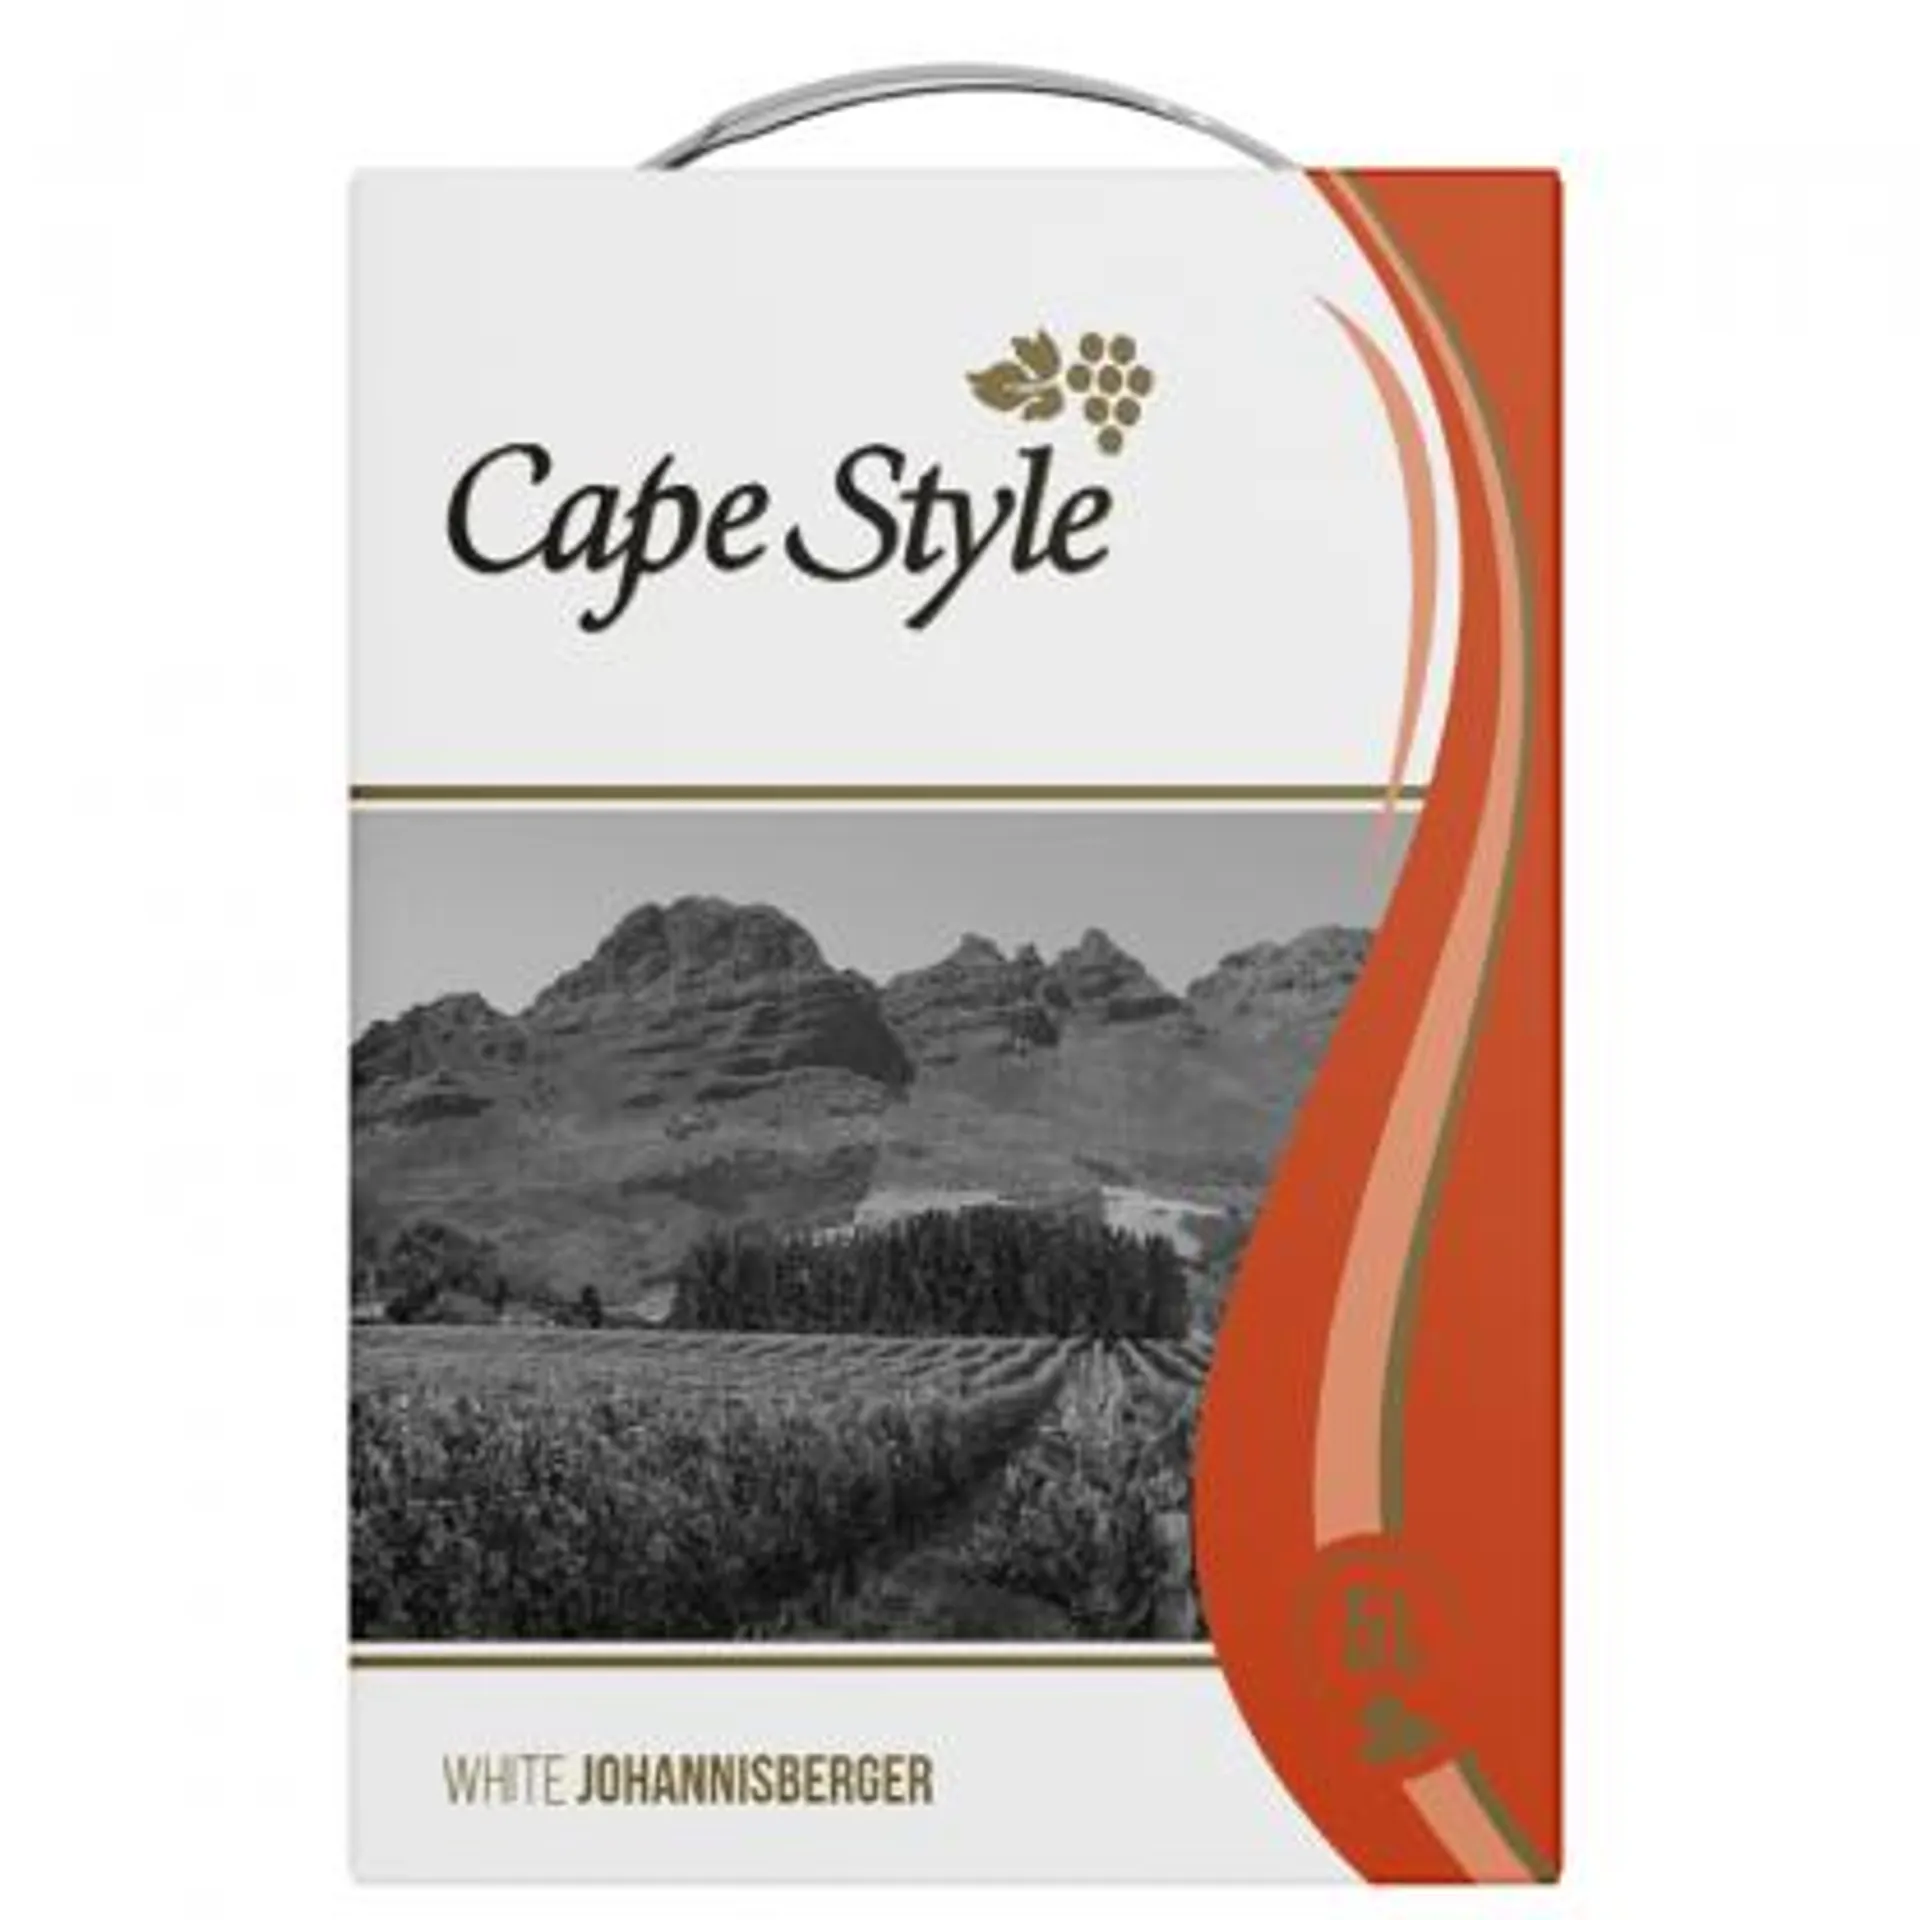 Cape Style Johannisberger White (1x5000ML)